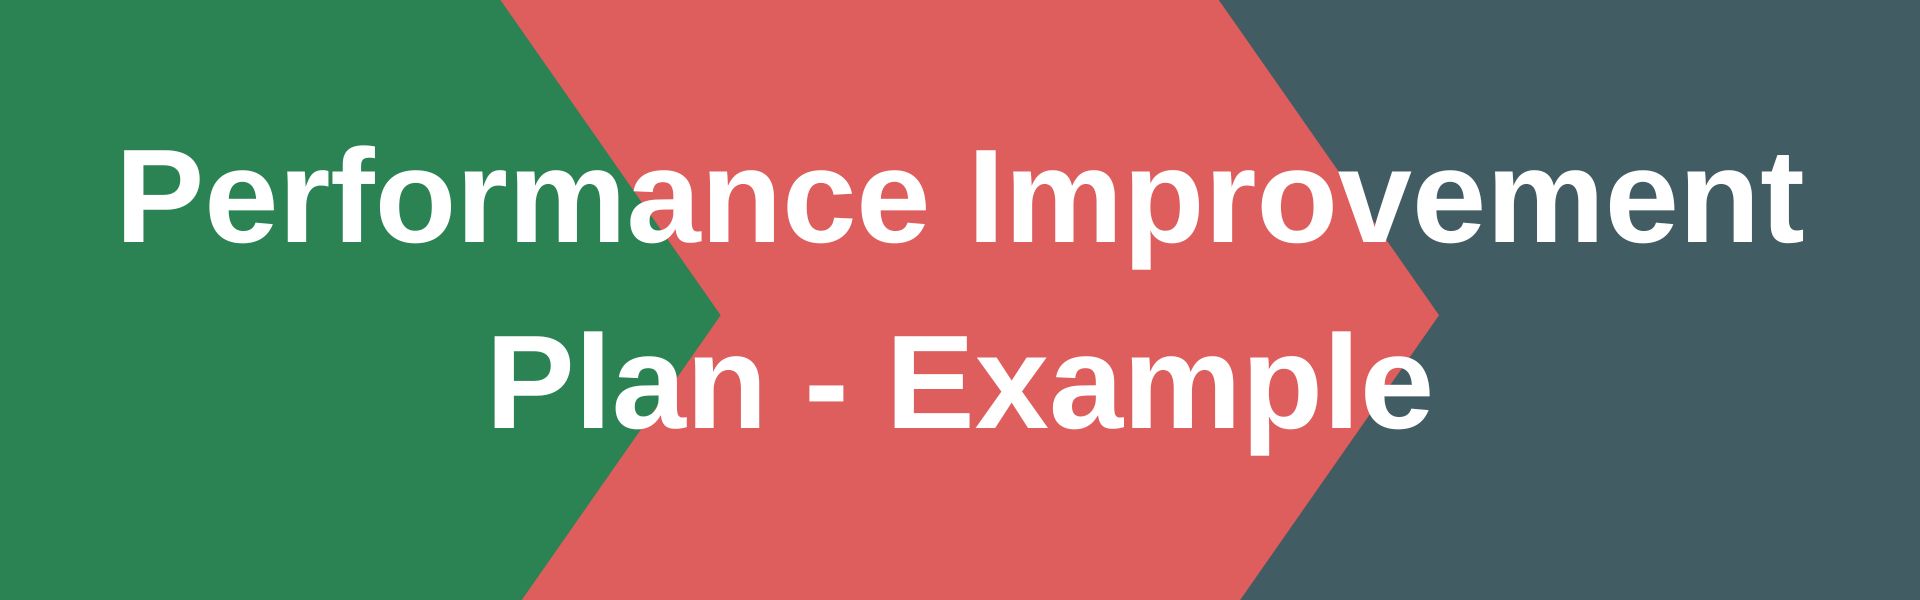 Performance Improvement Plan Example